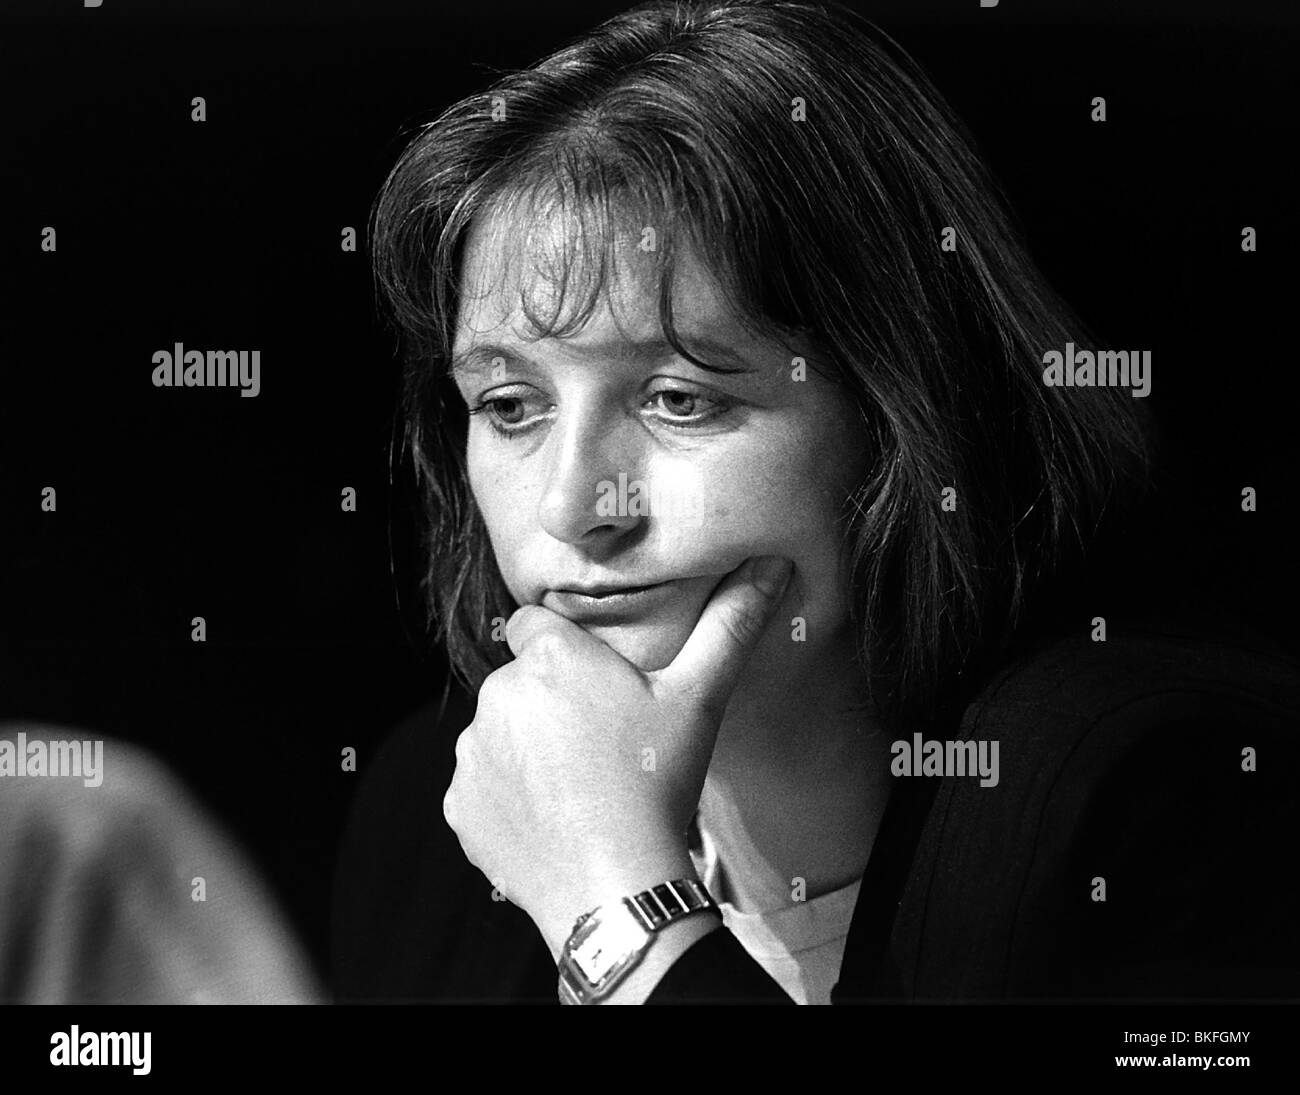 Leutheusser - Schnarrenberger, Sabine, * 26.7.1951, German politician (FDP), portrait, 1990s, Stock Photo